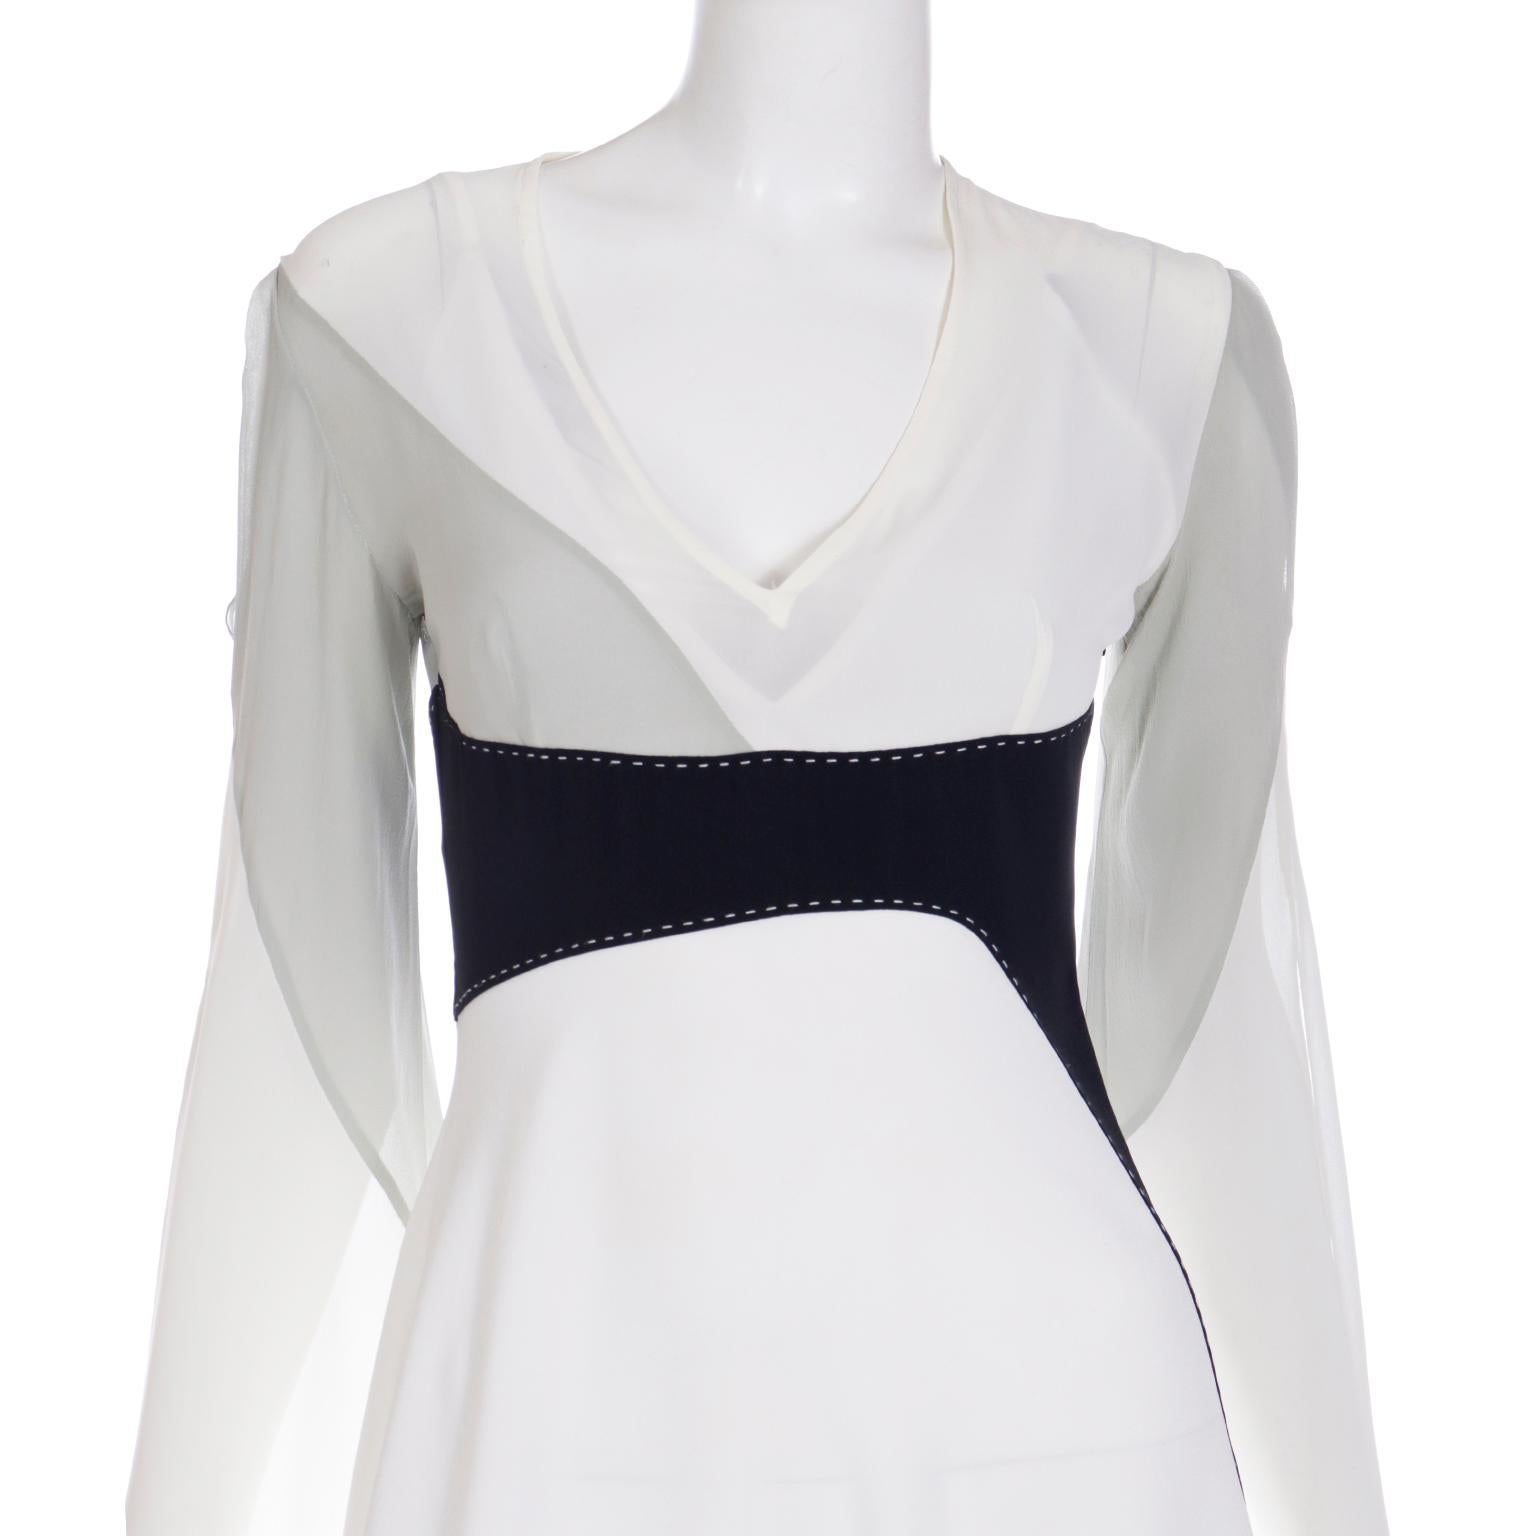 Vintage Gattinoni 1990s White Grey and Black Asymmetrical Dress w Open Shoulders For Sale 4